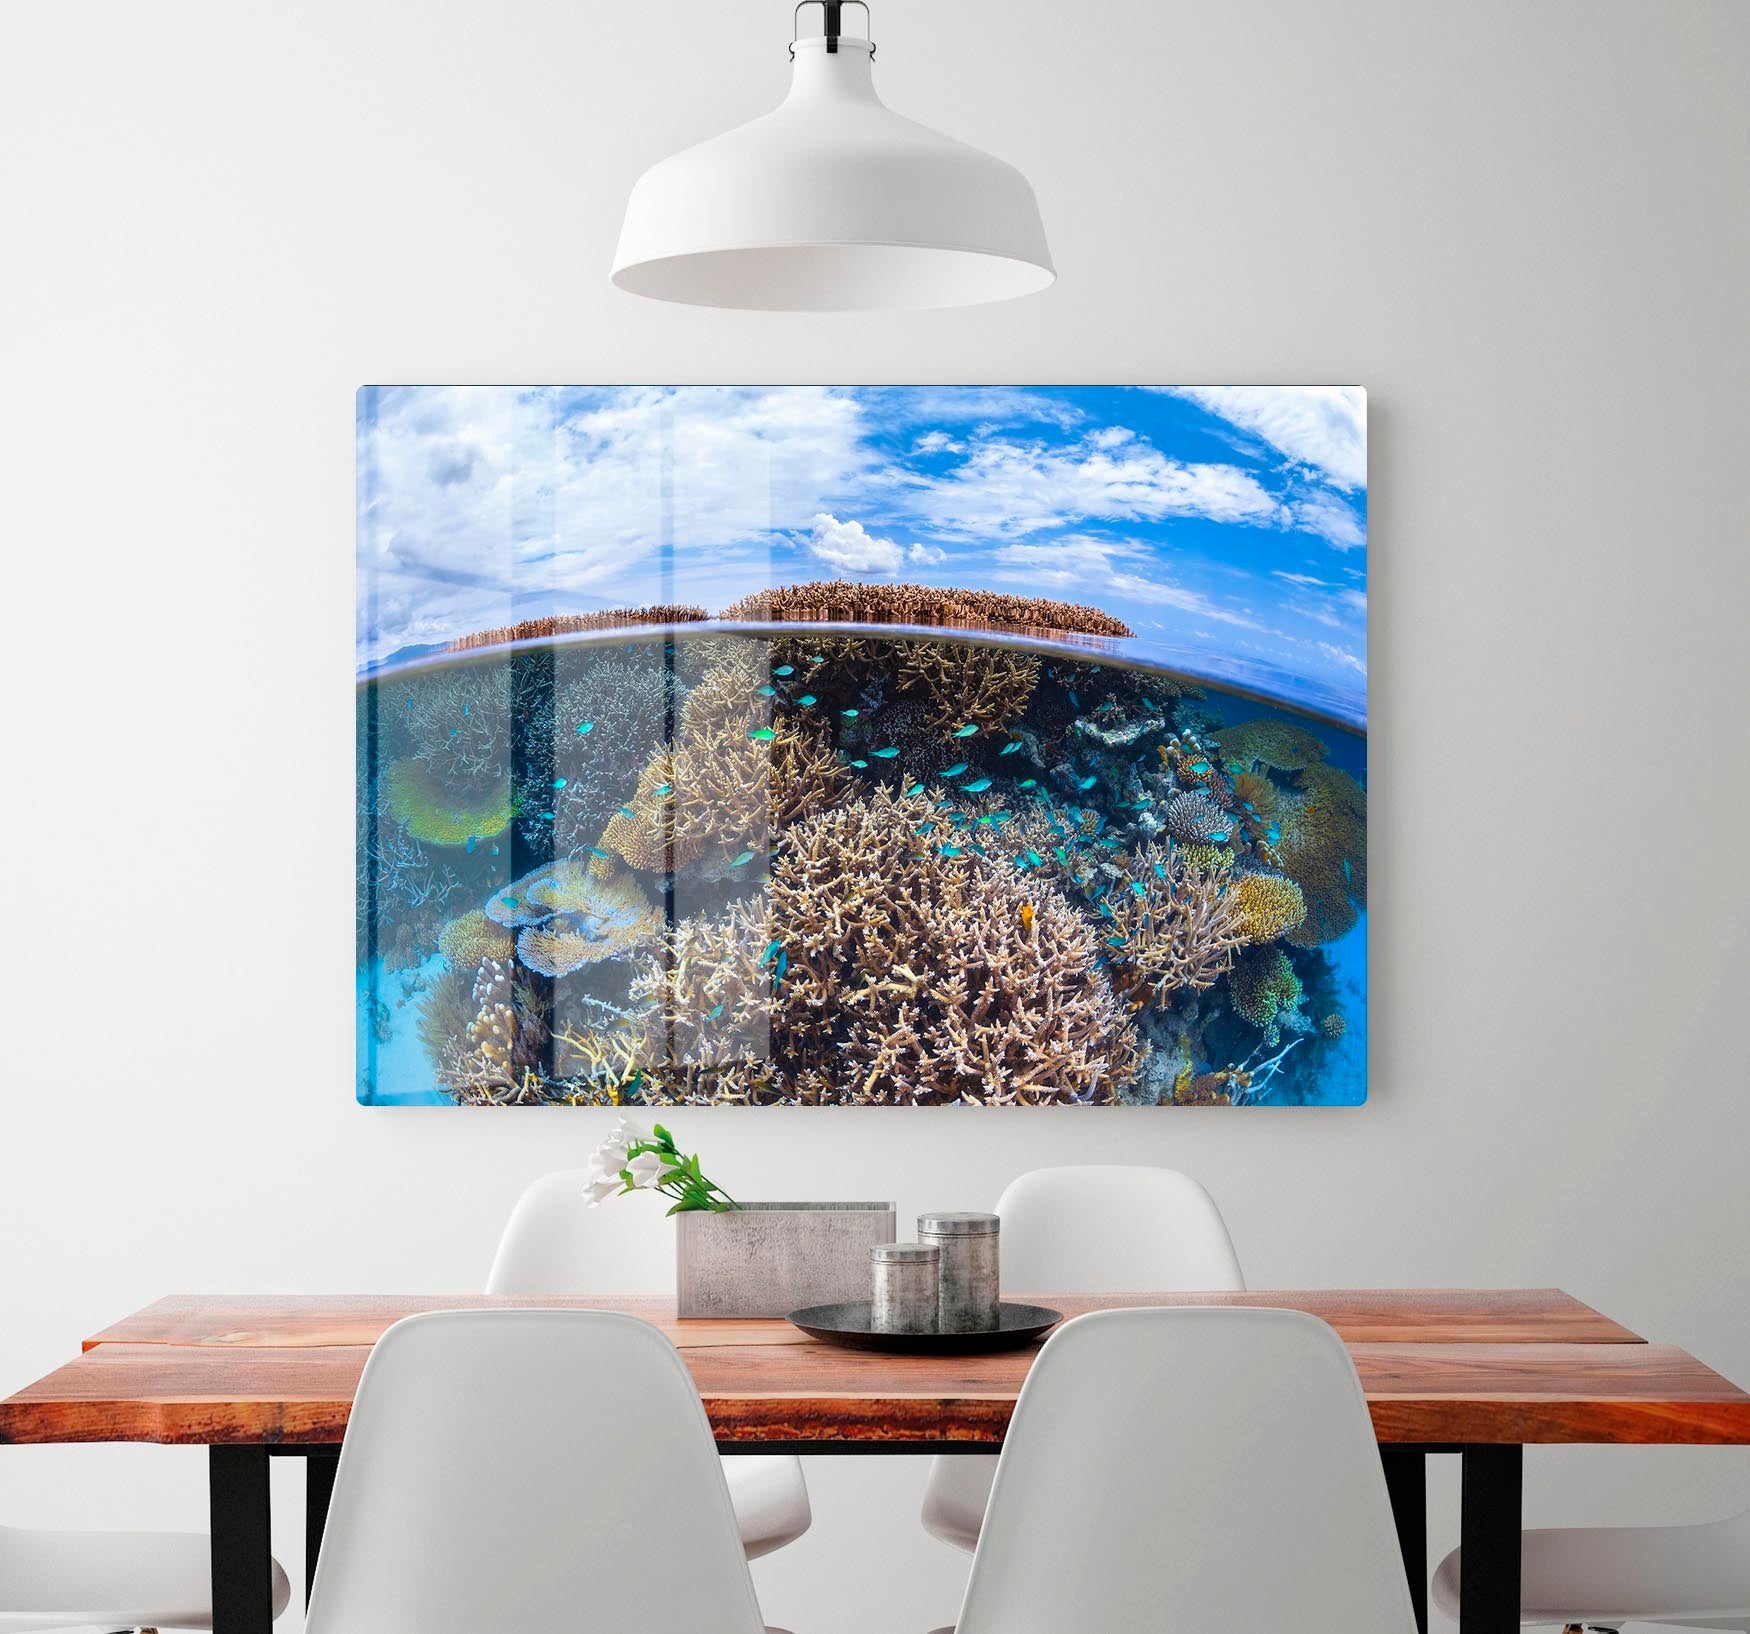 Split Level From Mayotte Reef HD Metal Print - Canvas Art Rocks - 2